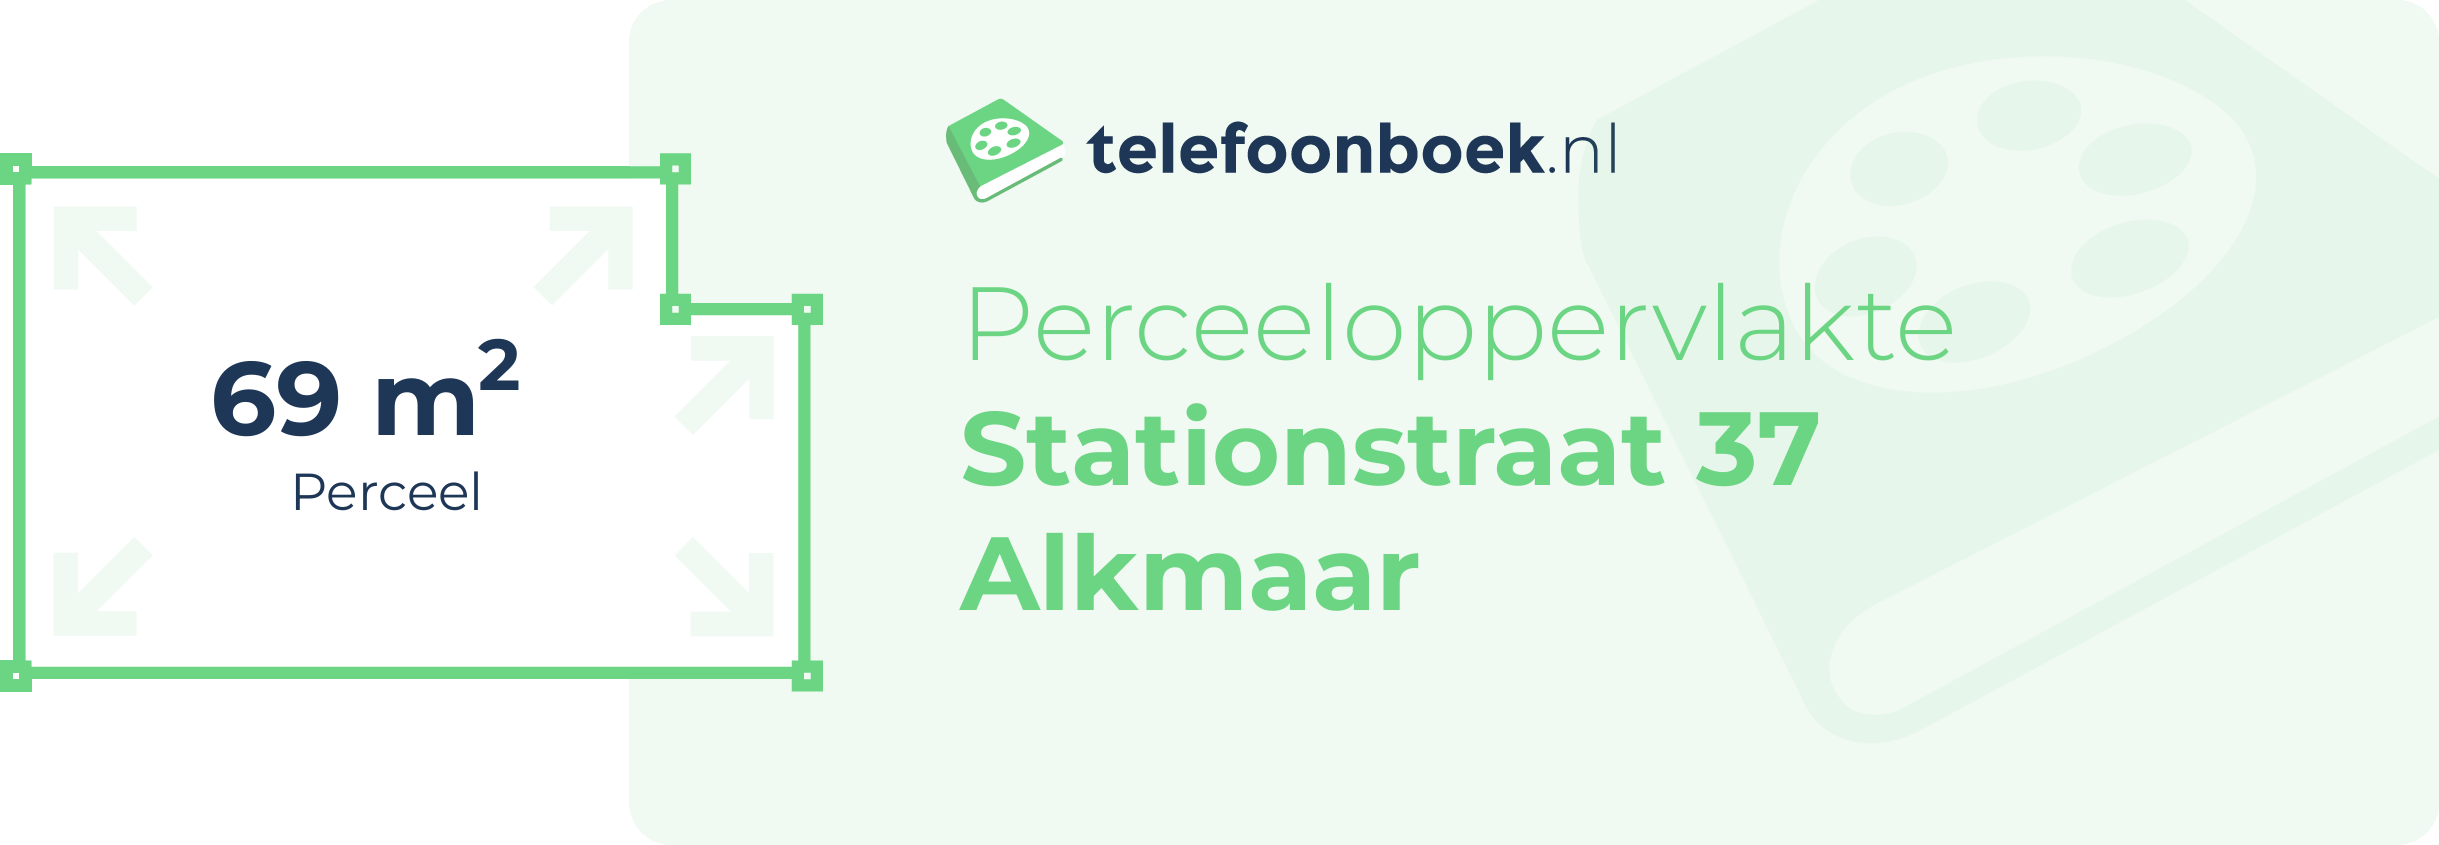 Perceeloppervlakte Stationstraat 37 Alkmaar